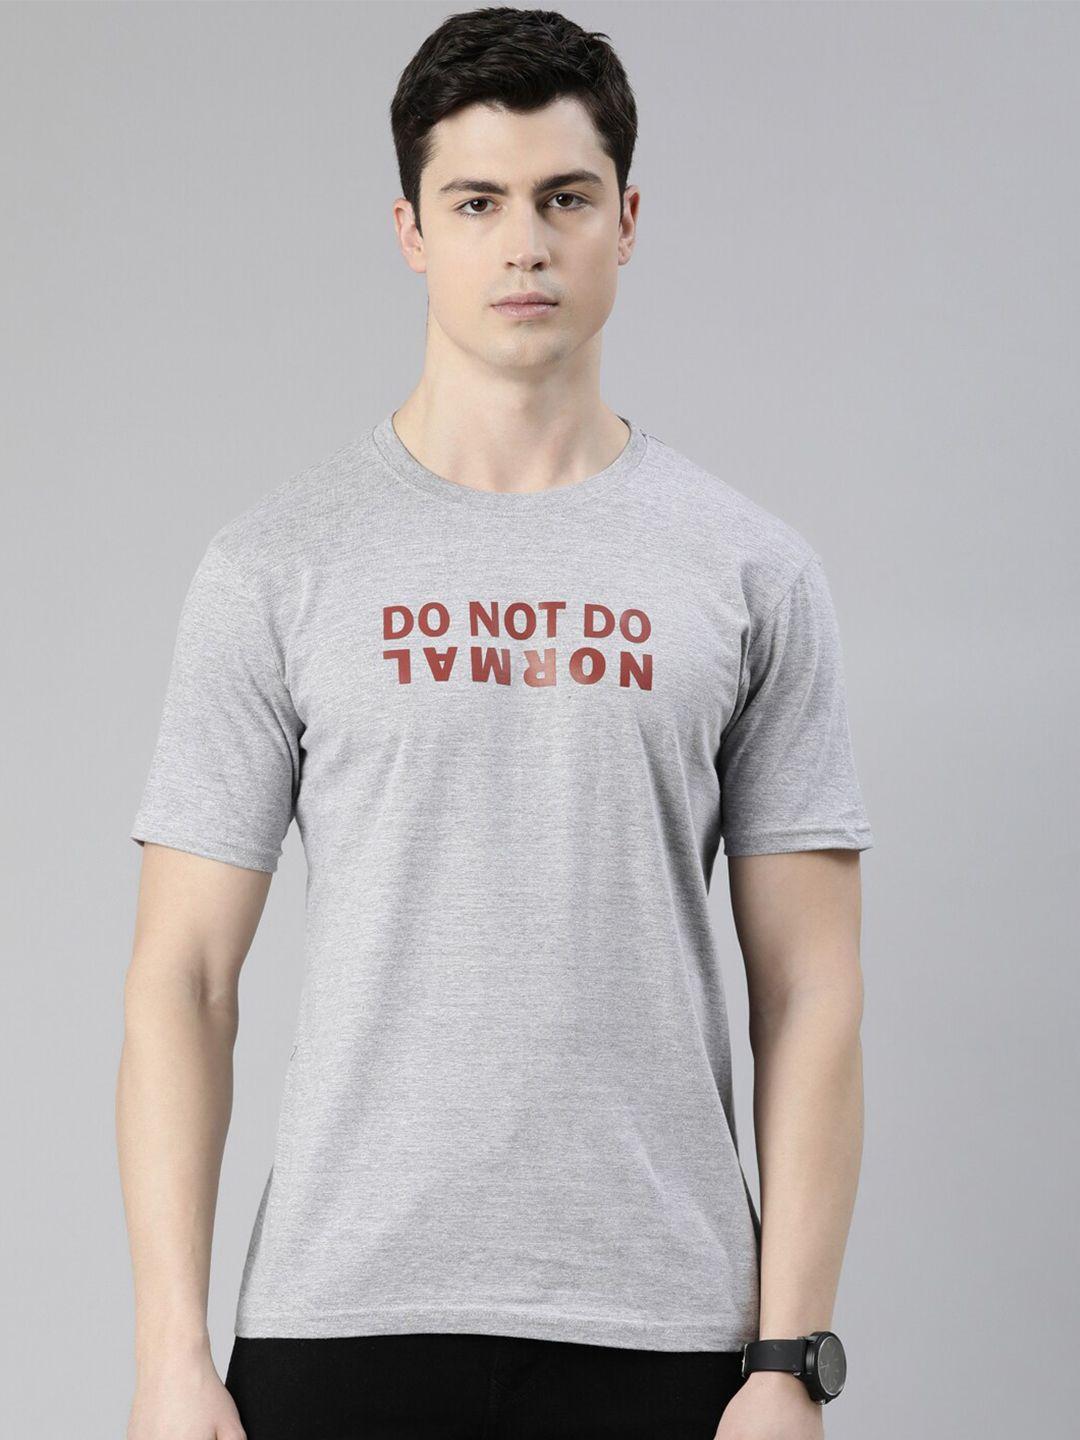 recast bio finish typography printed cotton t-shirt